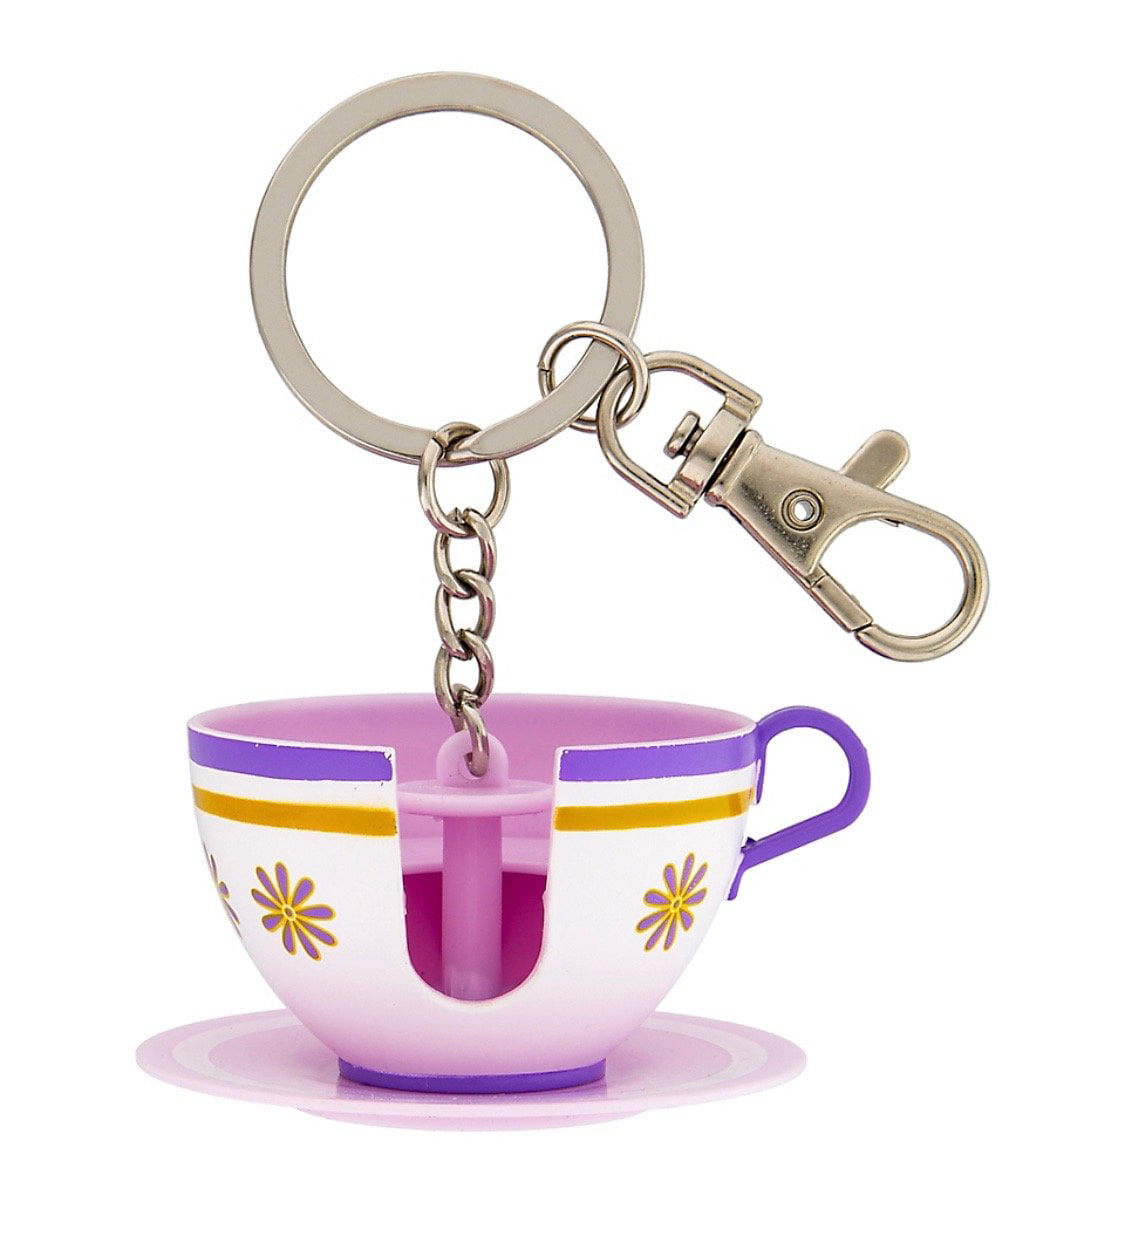 Details about   Disney Parks Alice in Wonderland Mad Tea Party Tea Cup Zipper Bag Charm NEW